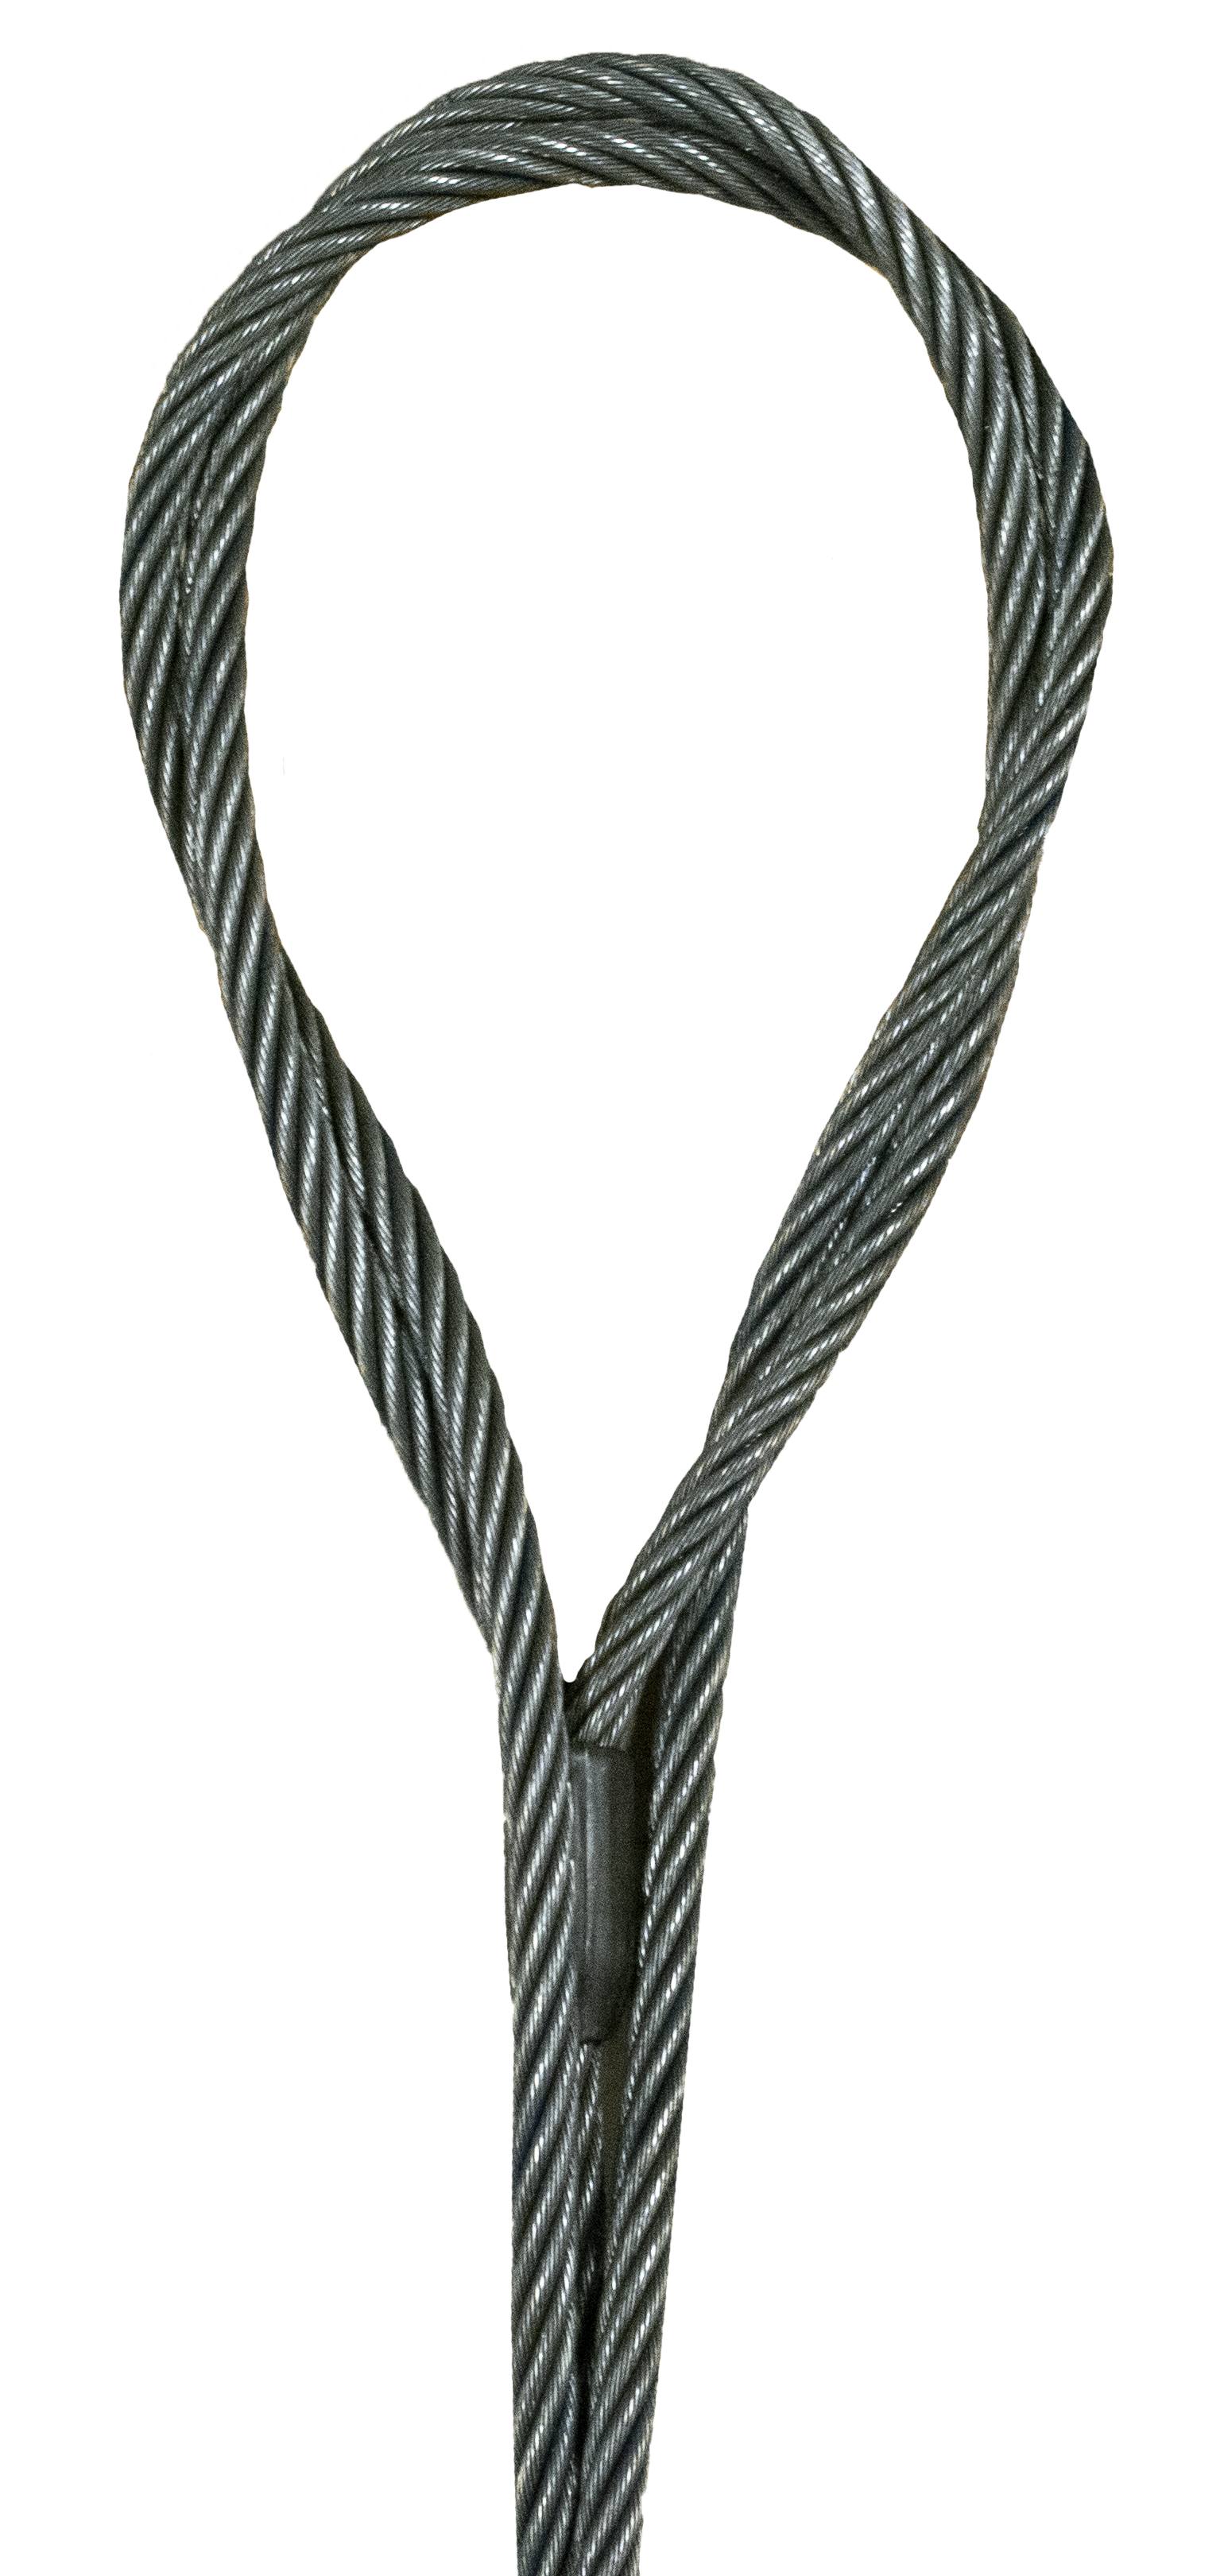 Tri-Flex Sling - I&I Sling, Inc. - Multi Part Wire Rope Sling